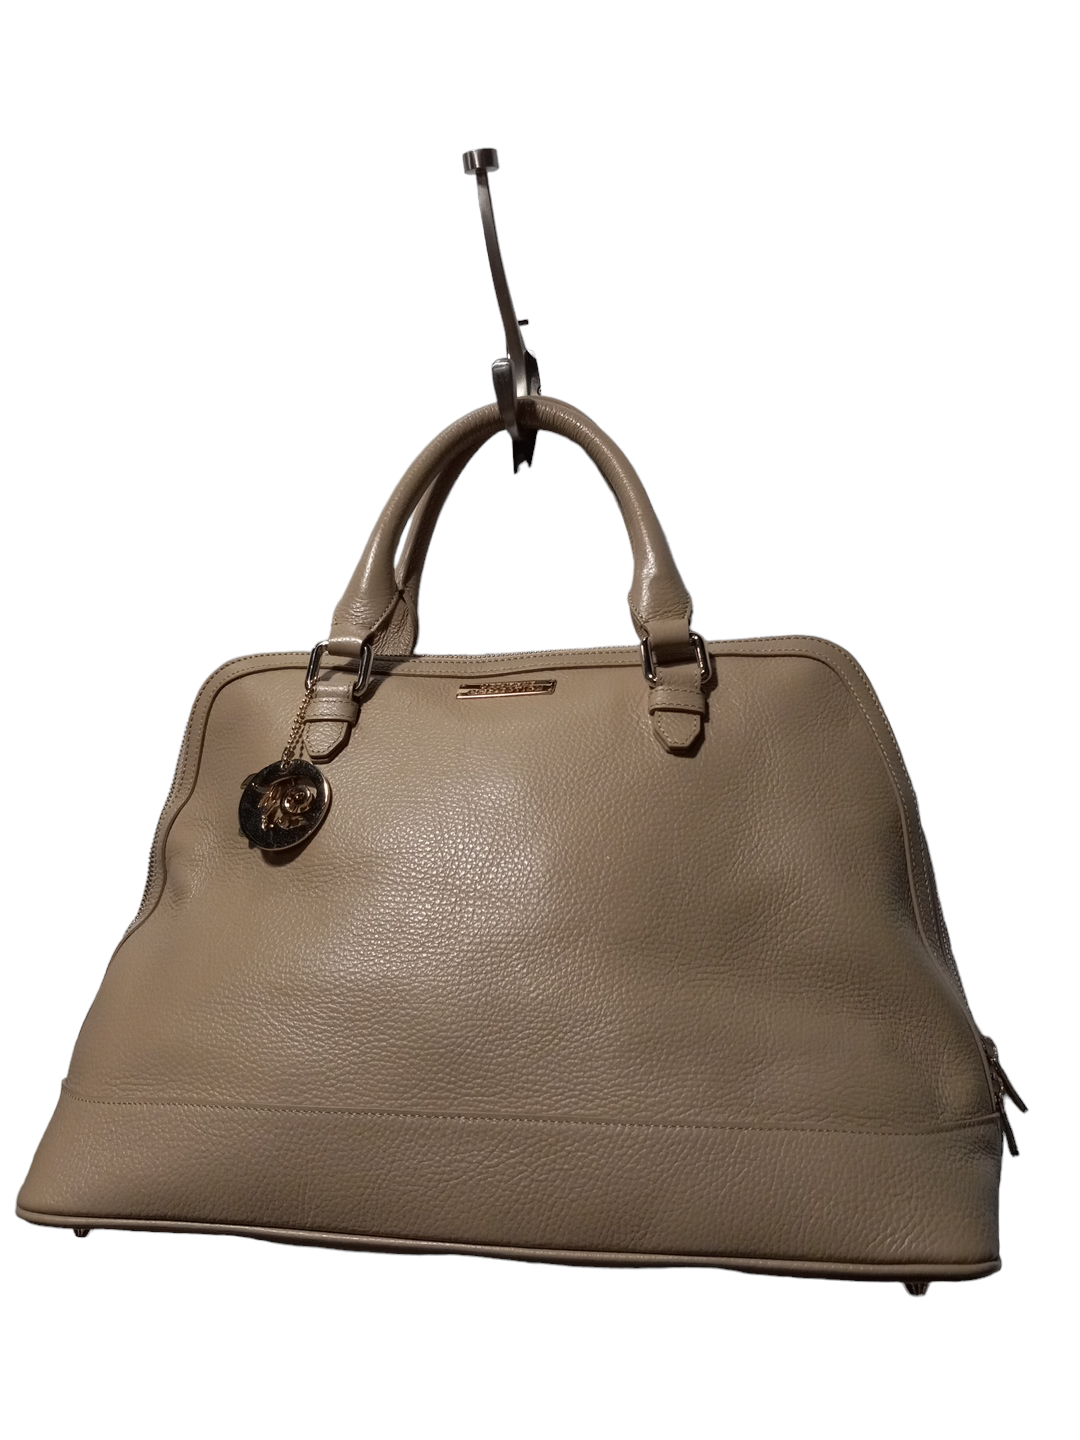 Handbag Designer Versace, Size Large